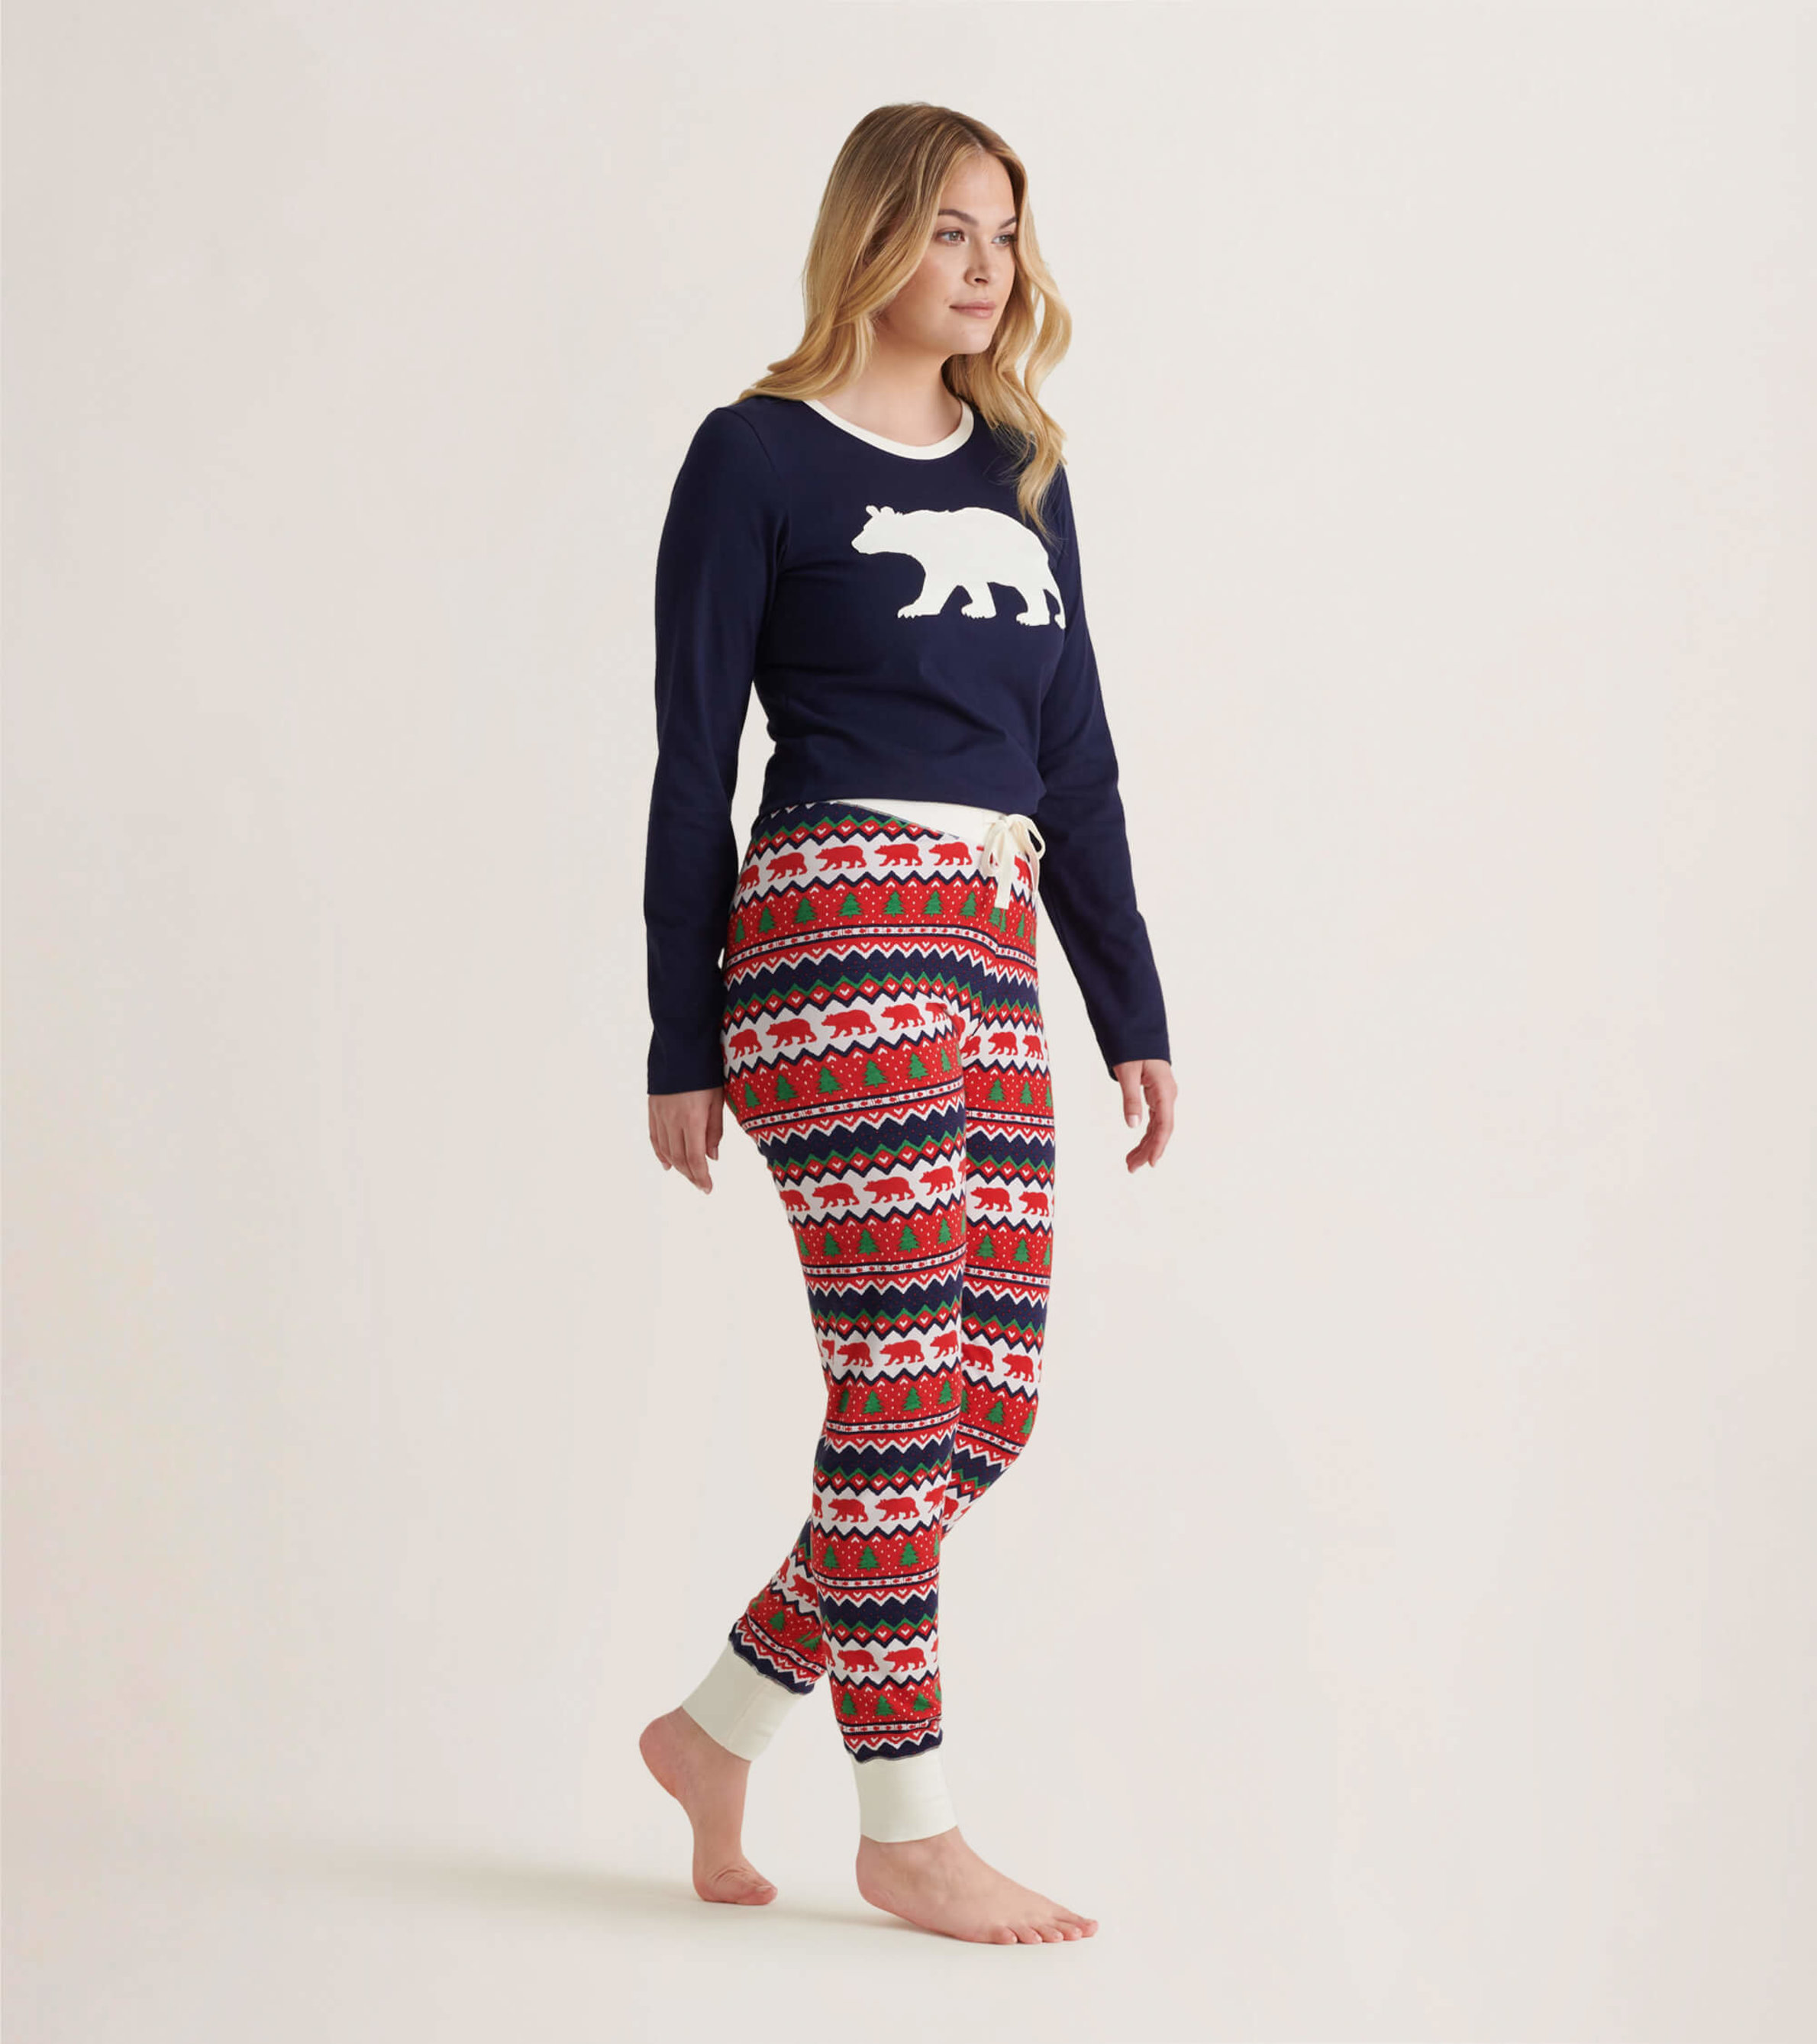 Arctic Trail Women's Gray & Pink Plaid Fleece Pajama Pants, Size L